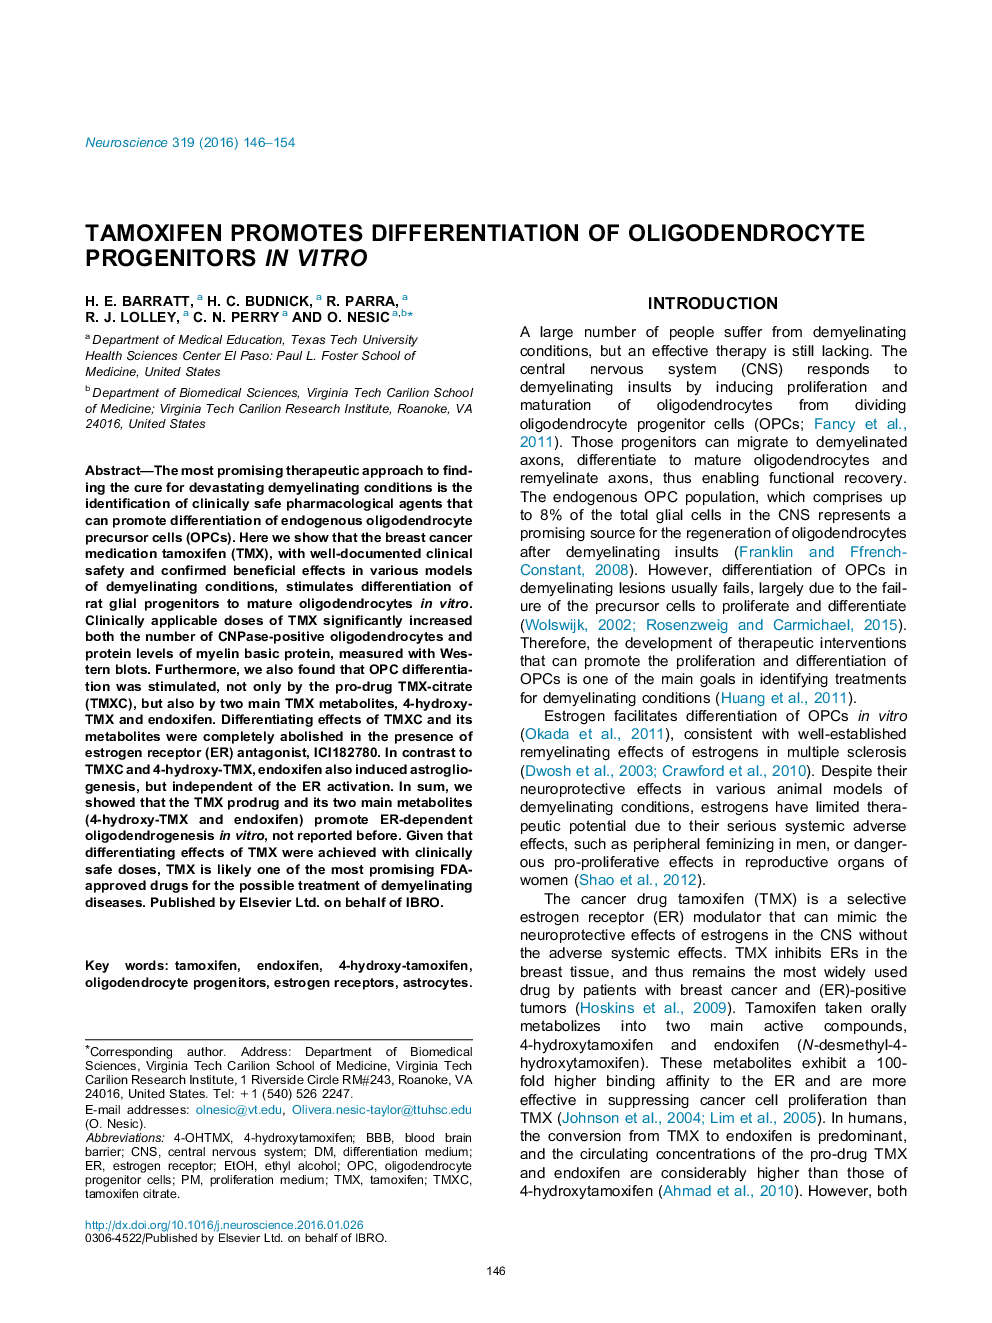 Tamoxifen promotes differentiation of oligodendrocyte progenitors in vitro